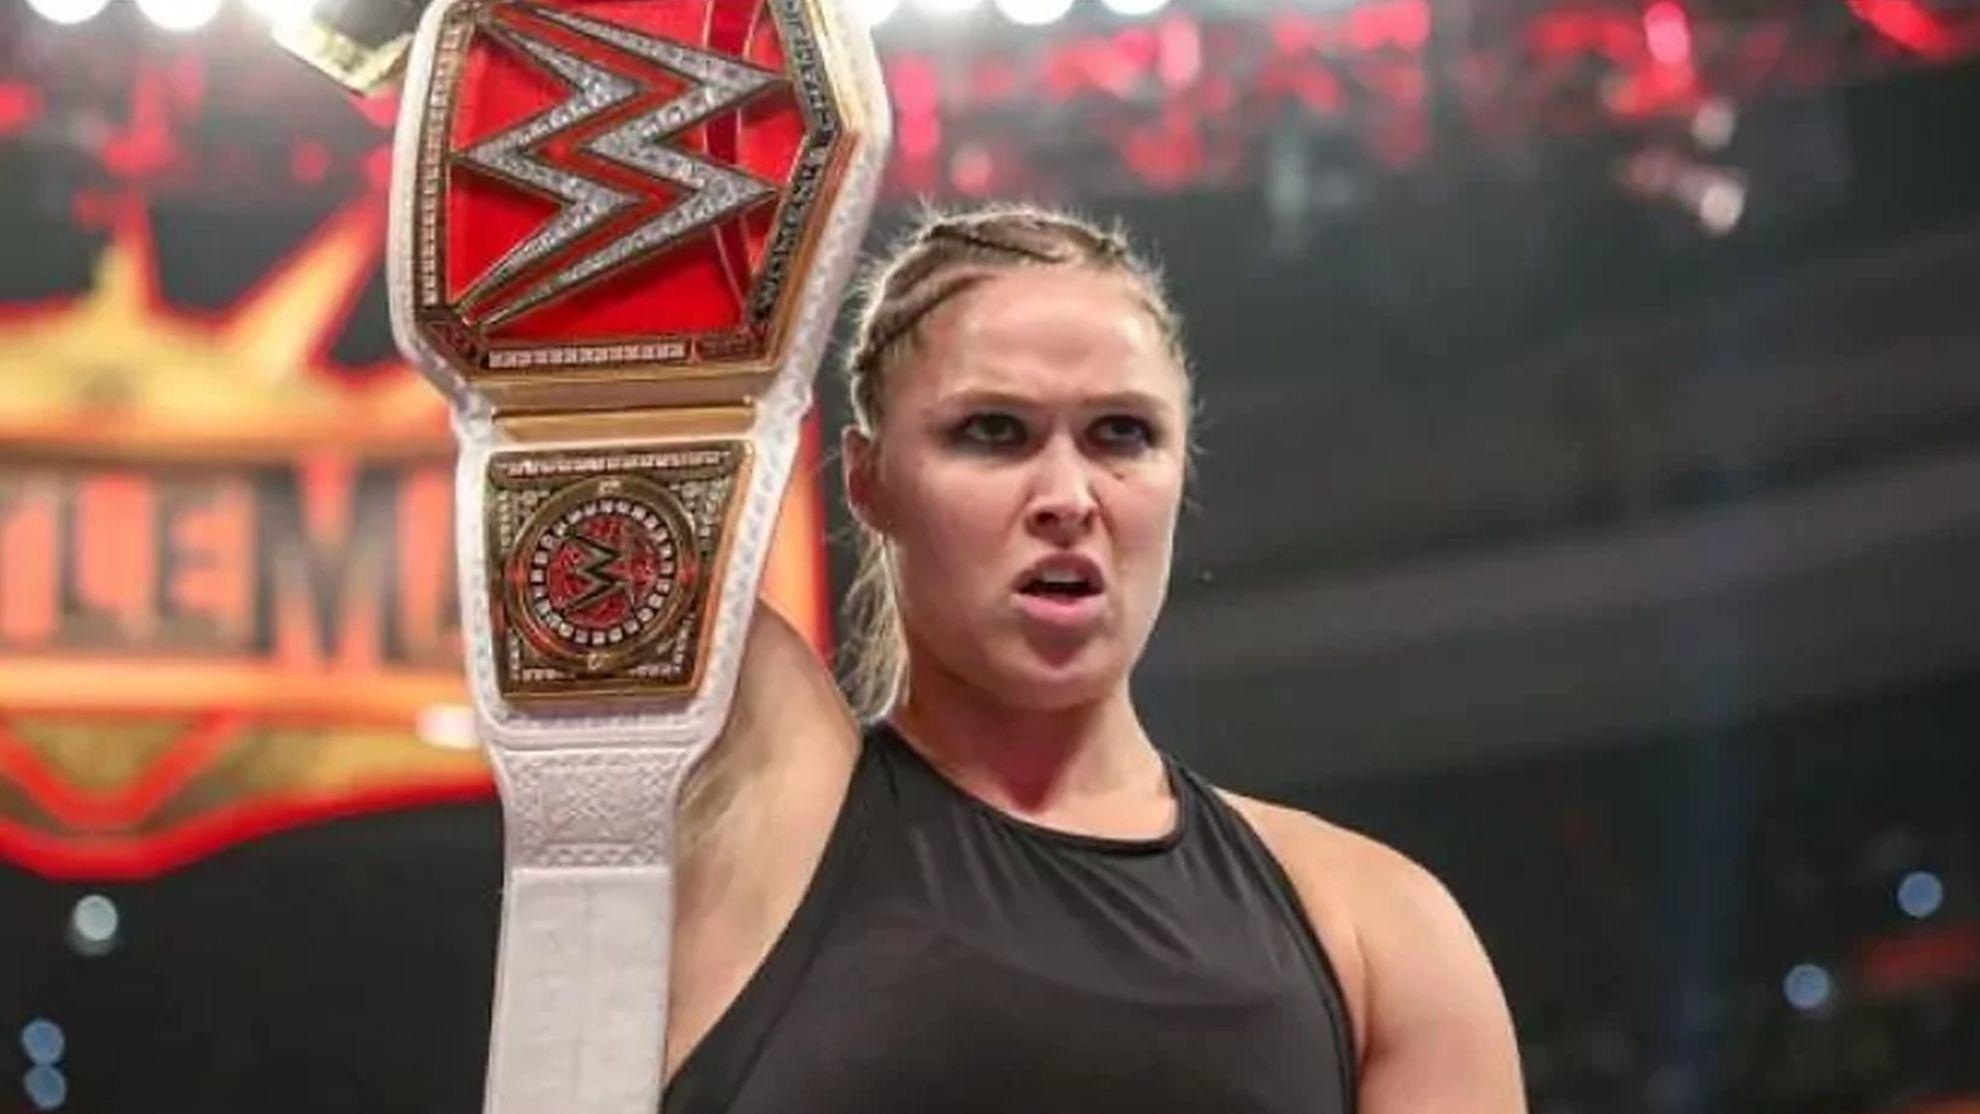 Ronda je bila jedna od najopasnijih žena u ringu na planeti - Avaz